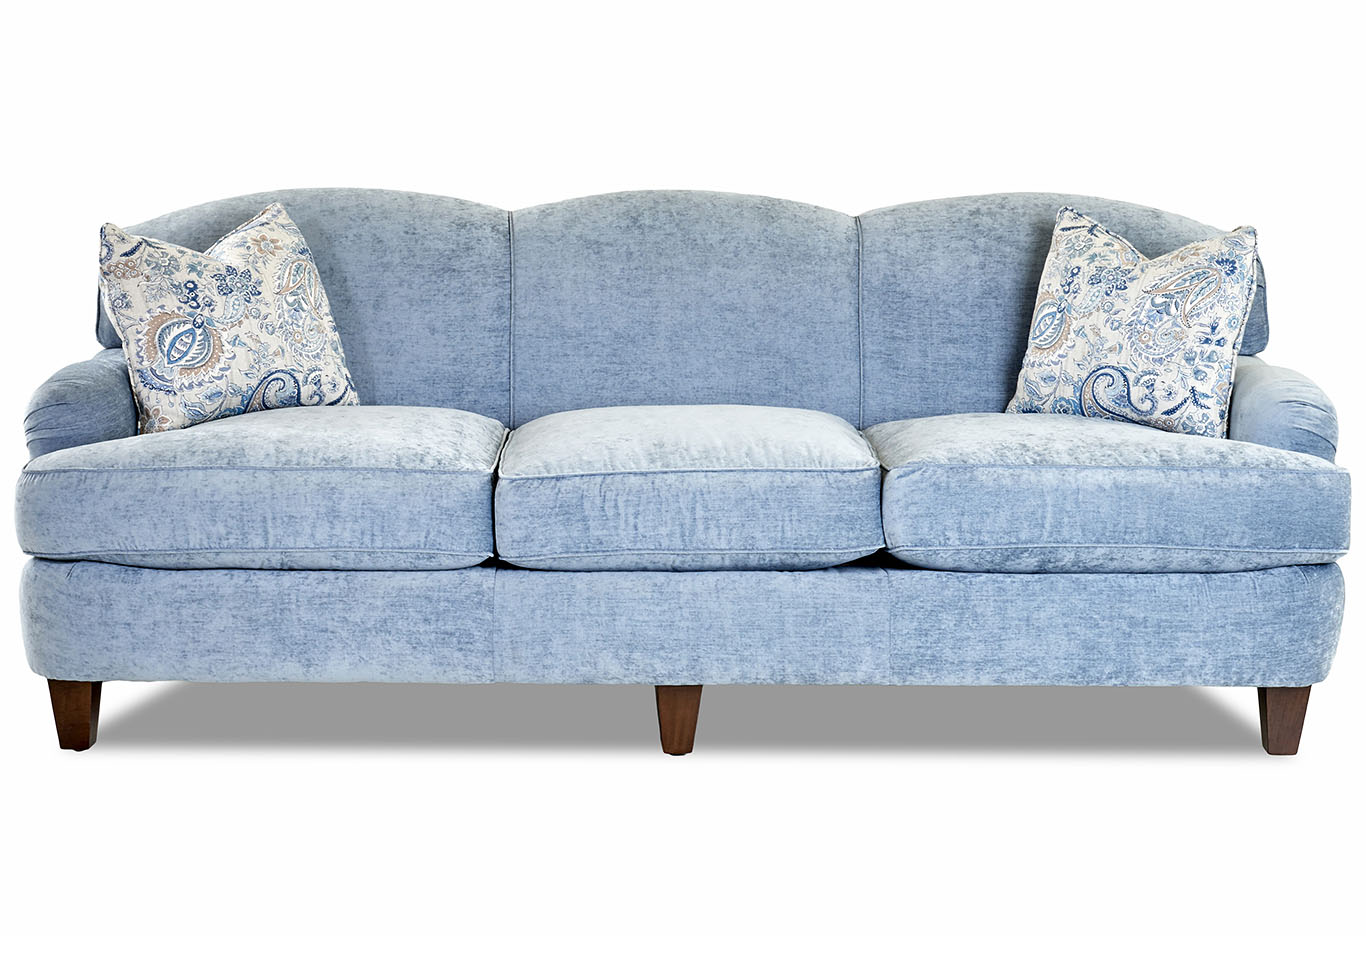 Albion Stationary Fabric Sofa,Klaussner Home Furnishings